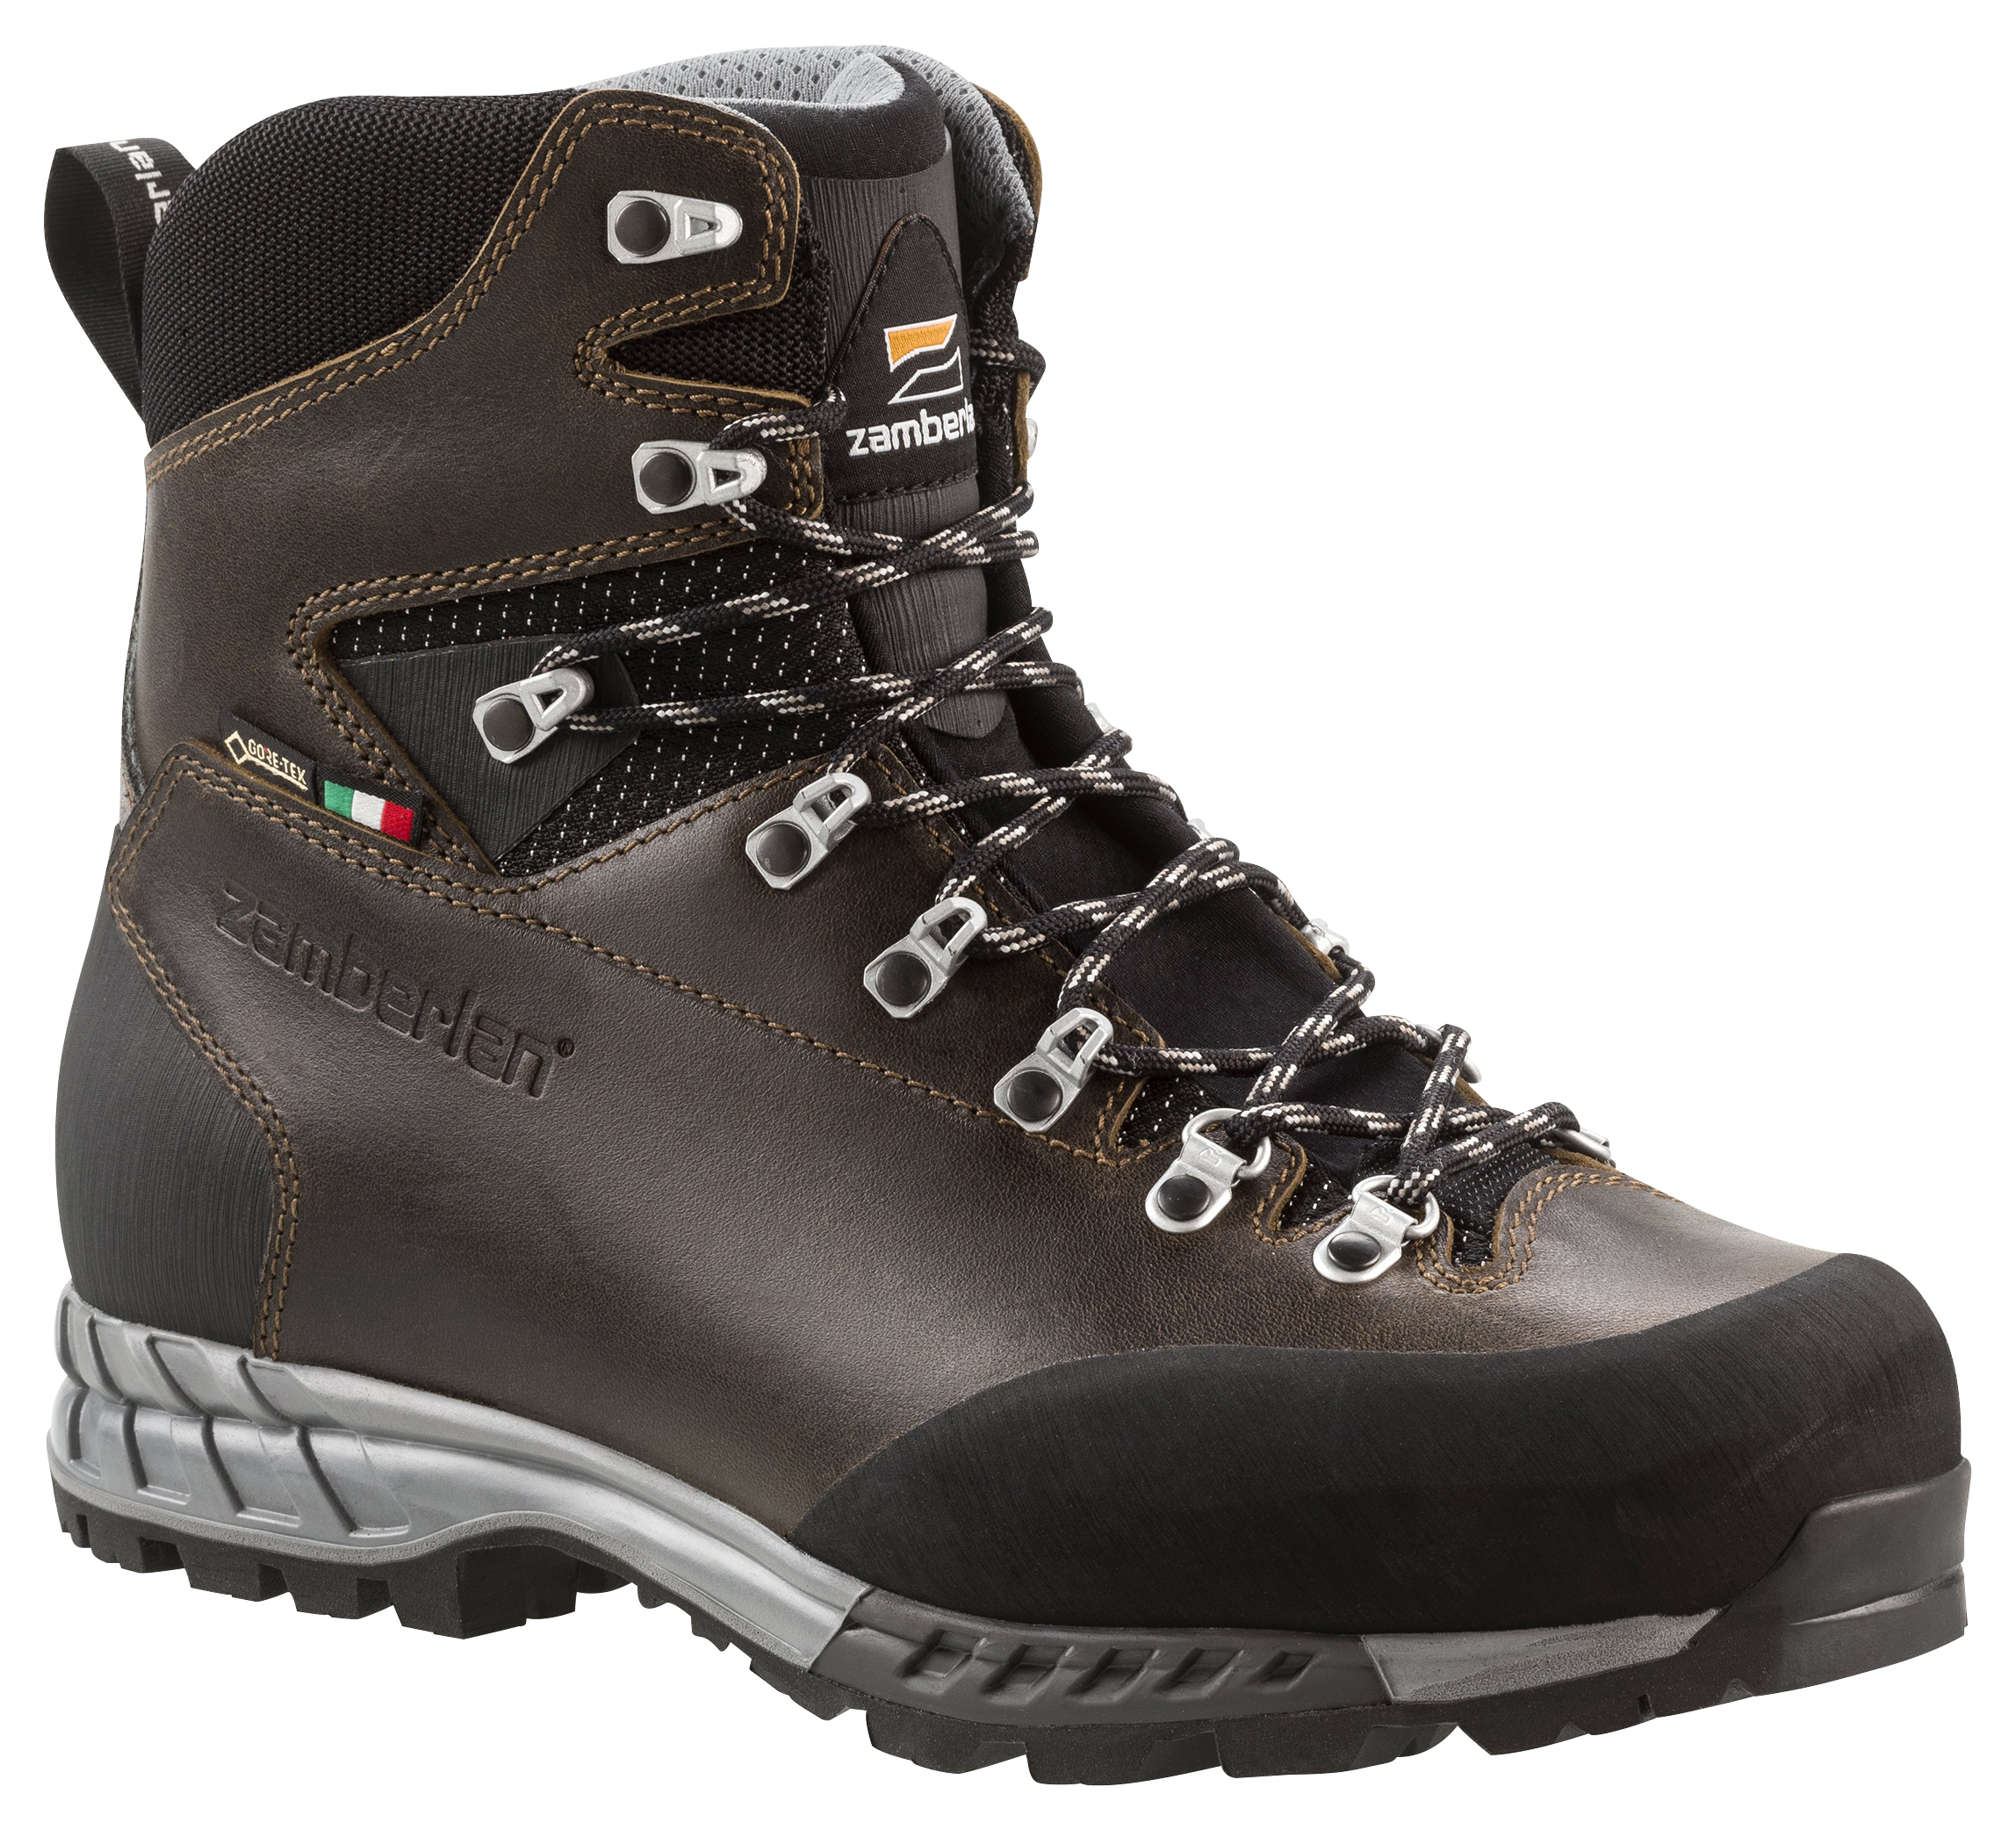 Zamberlan 1111 Cresta GTX   RR Waterproof Hiking Boots for Men - Waxed Dark Brown - 9 5M